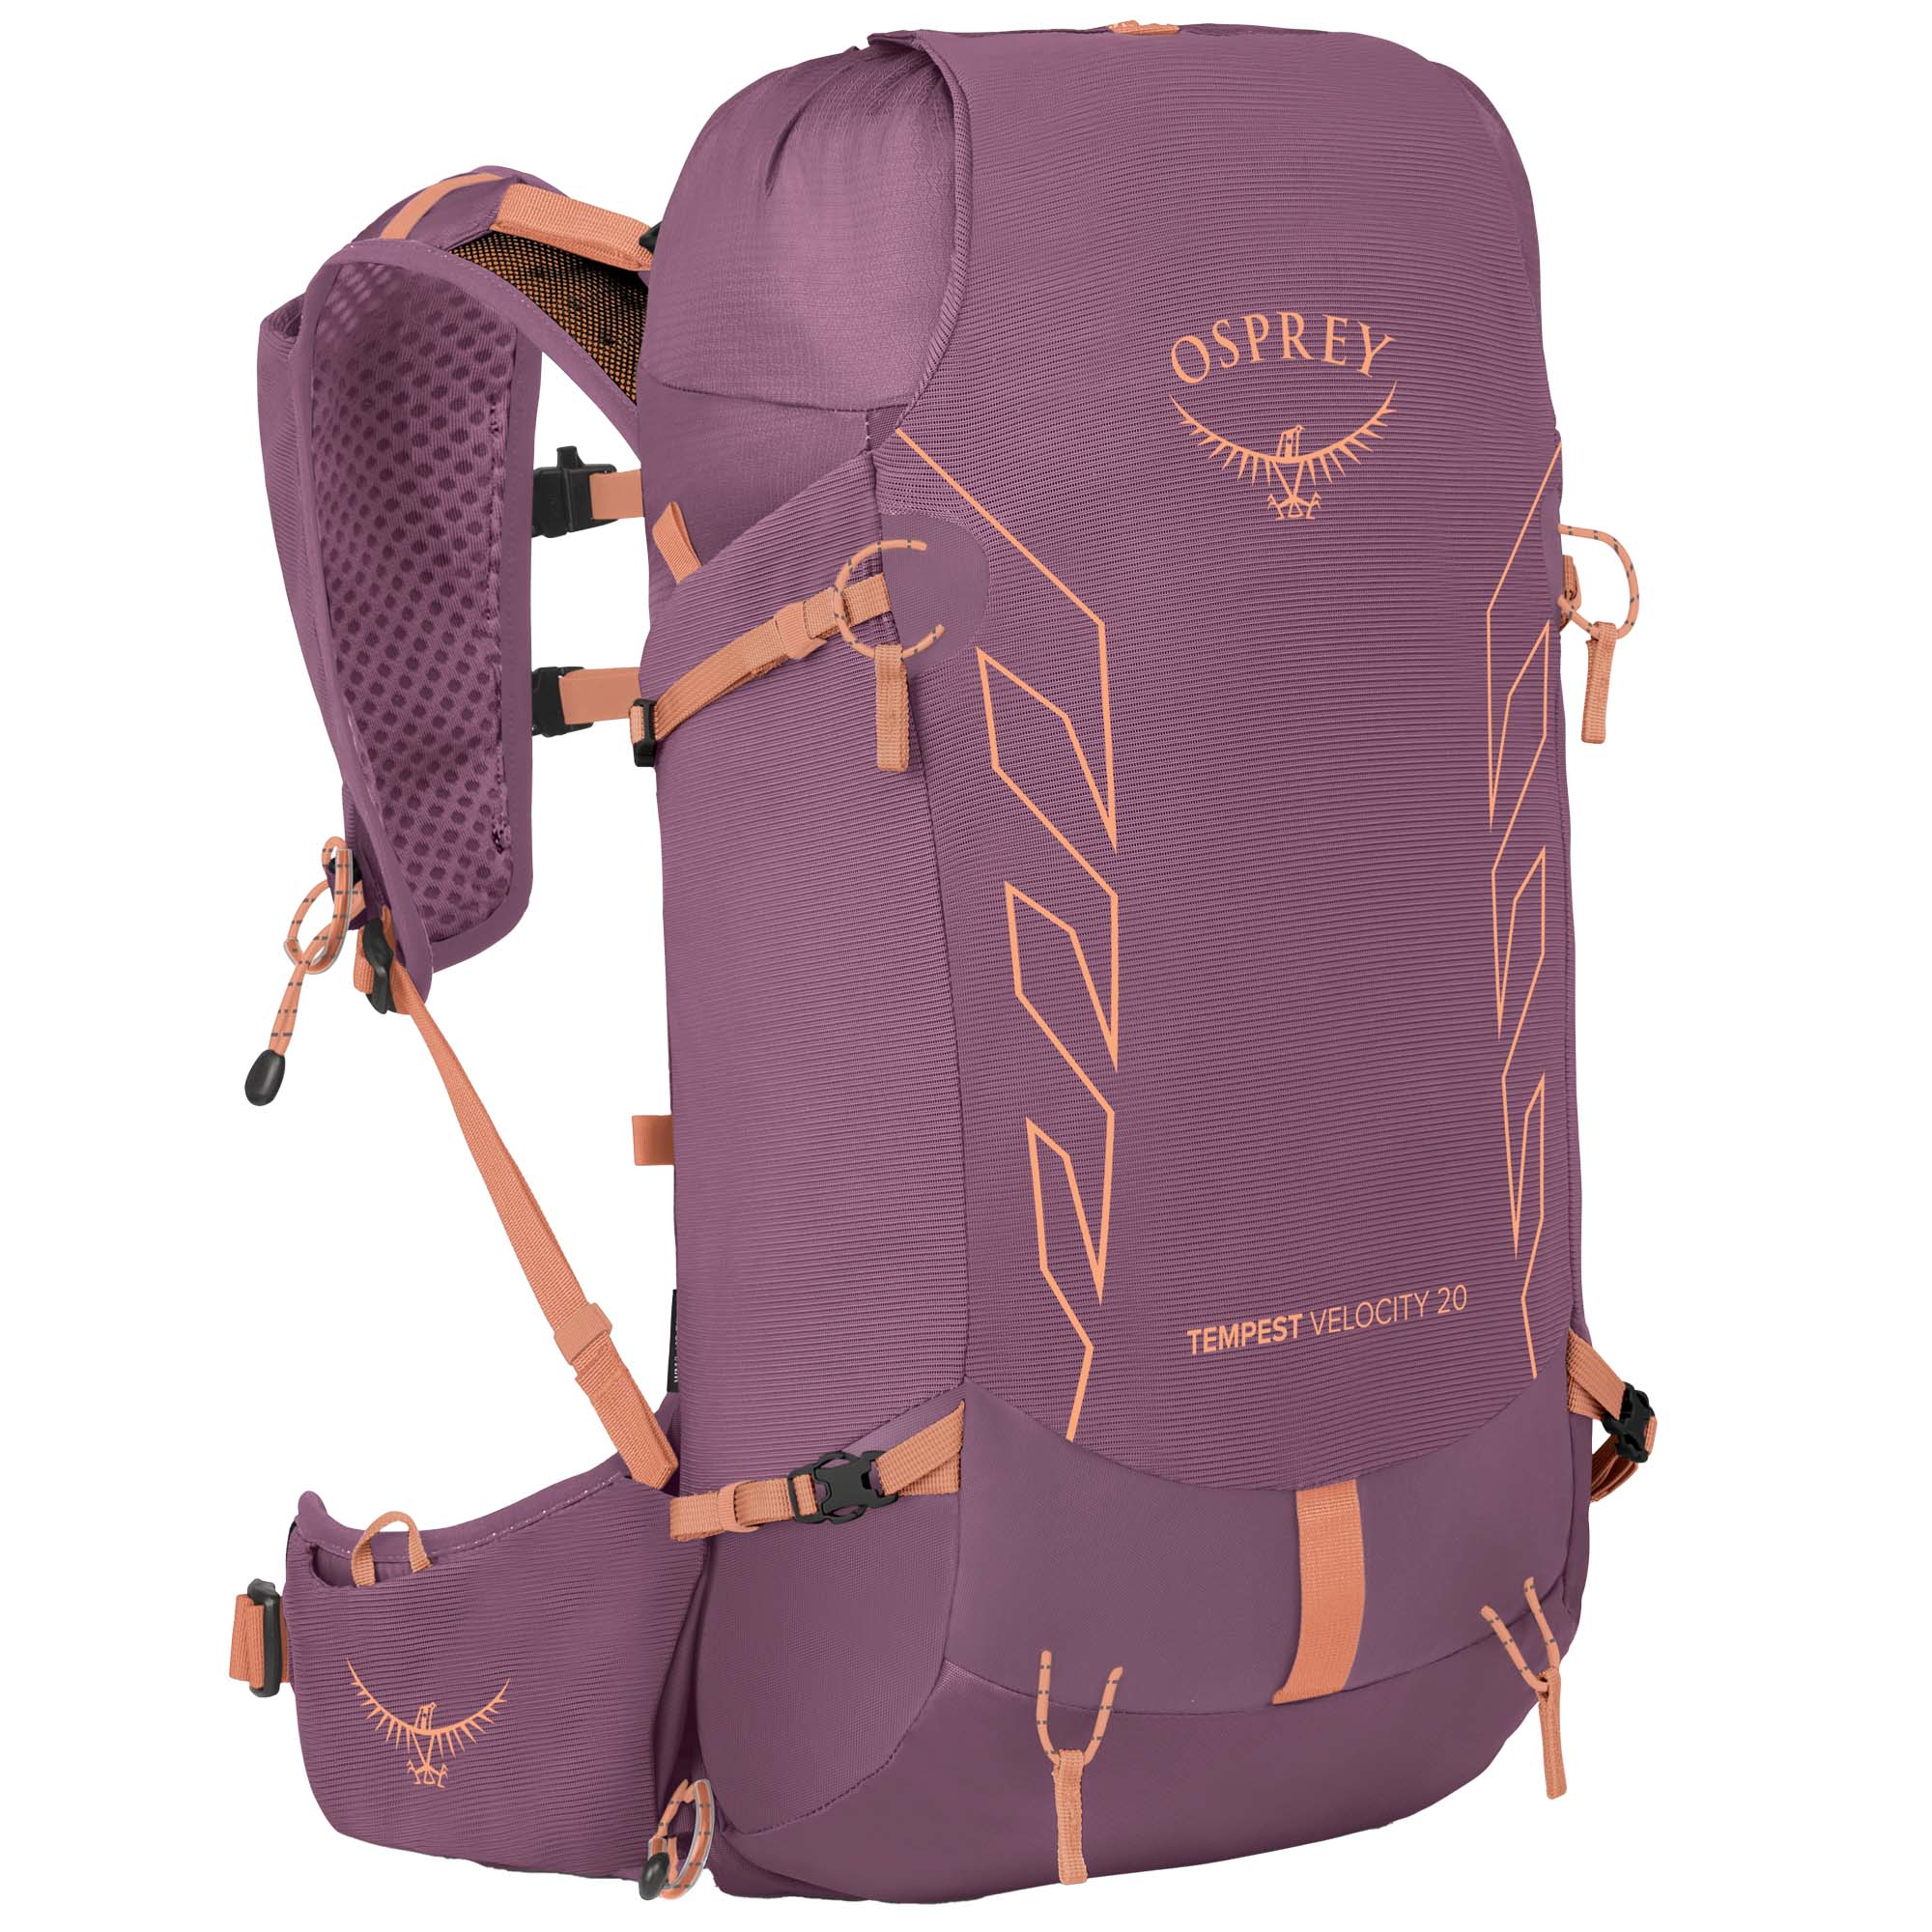 Osprey Tempest Velocity 20 Women's Technical Backpack